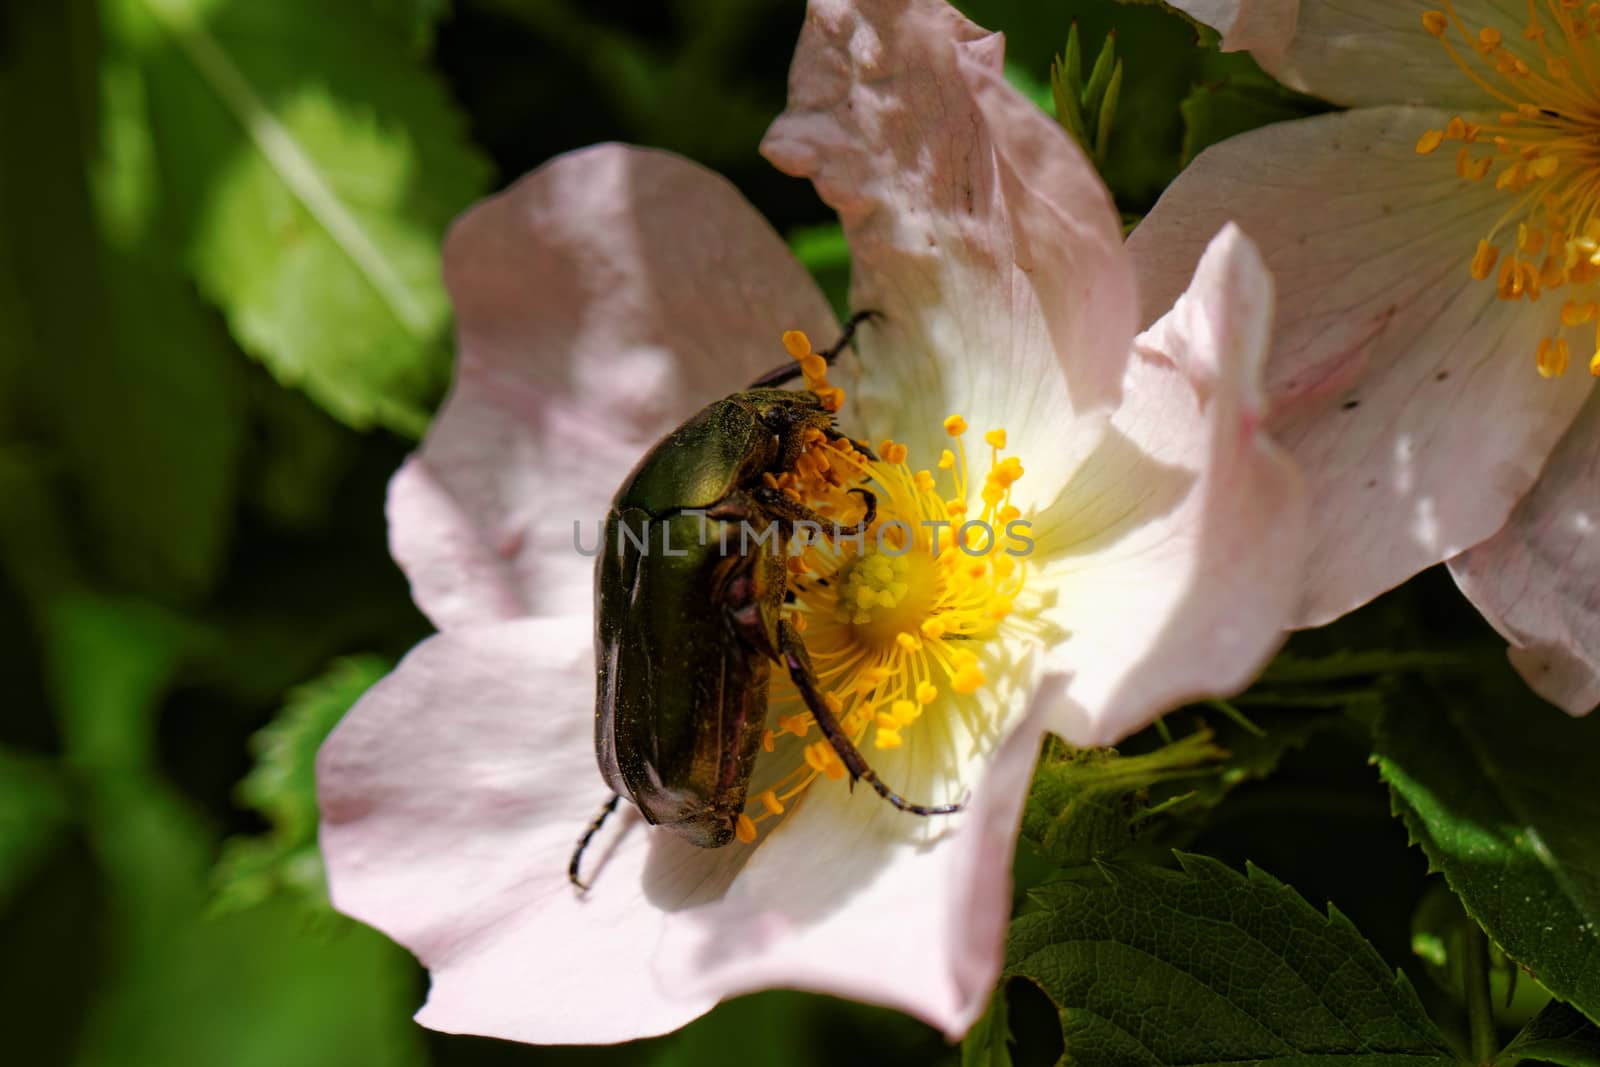 close up about copper flower beetle on flower (Protaetia fieberi)